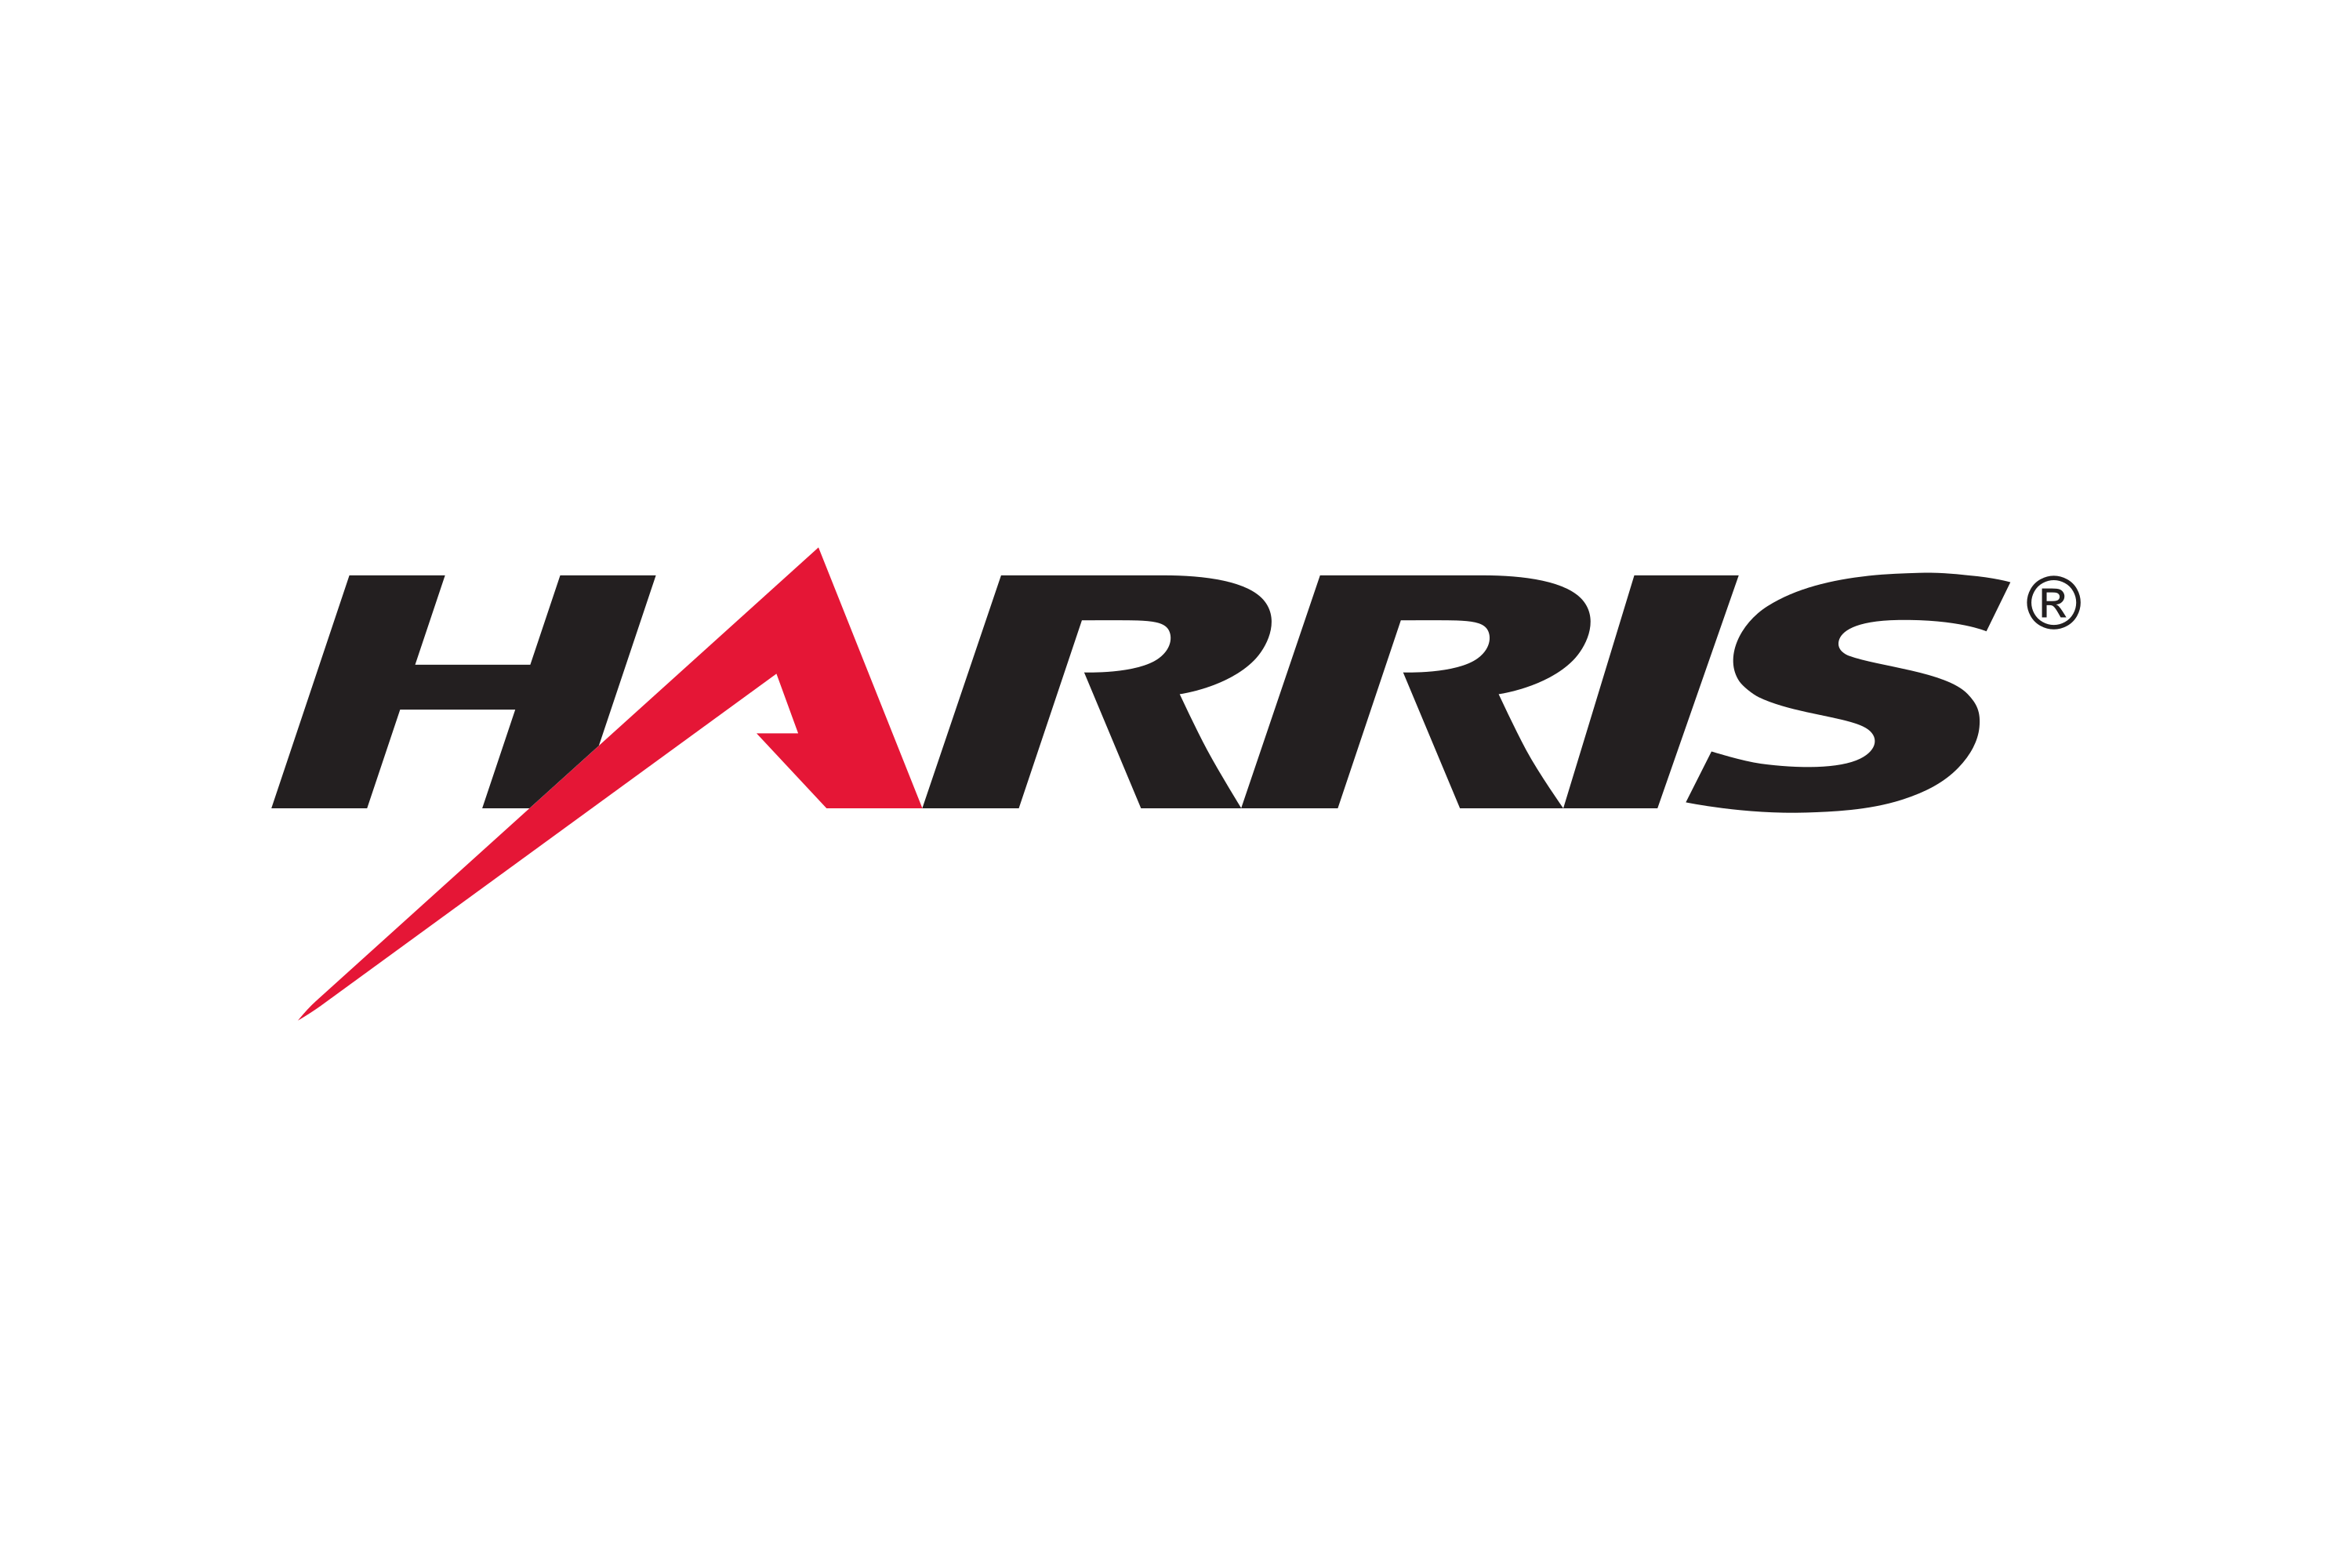 Download Harris Corporation Logo in SVG Vector or PNG File Format